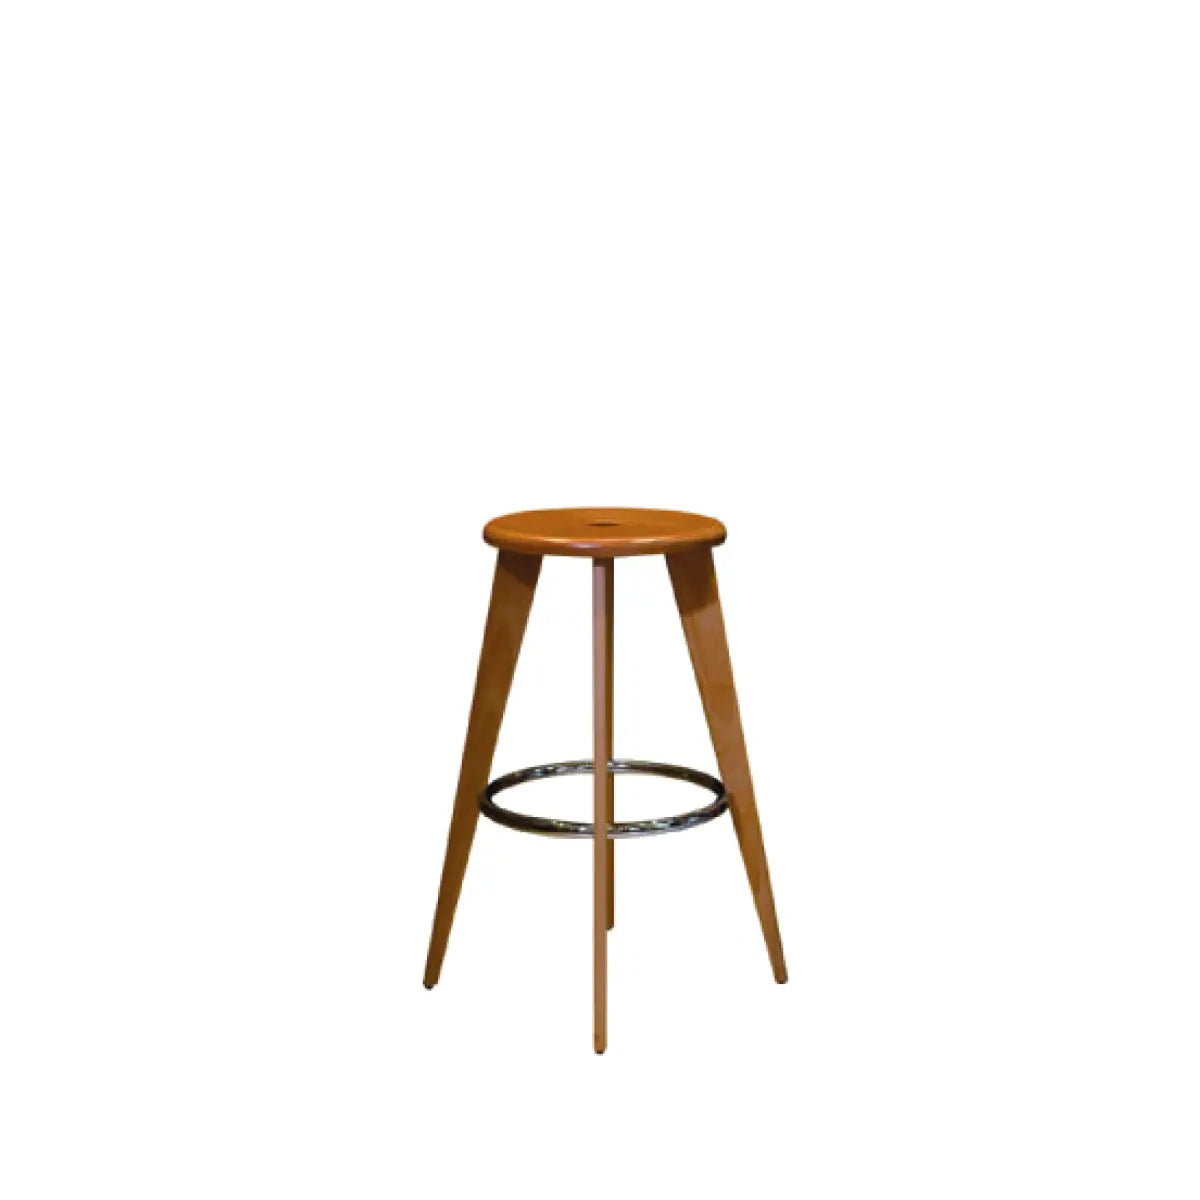 Nordic bar stool Desert River Rentals